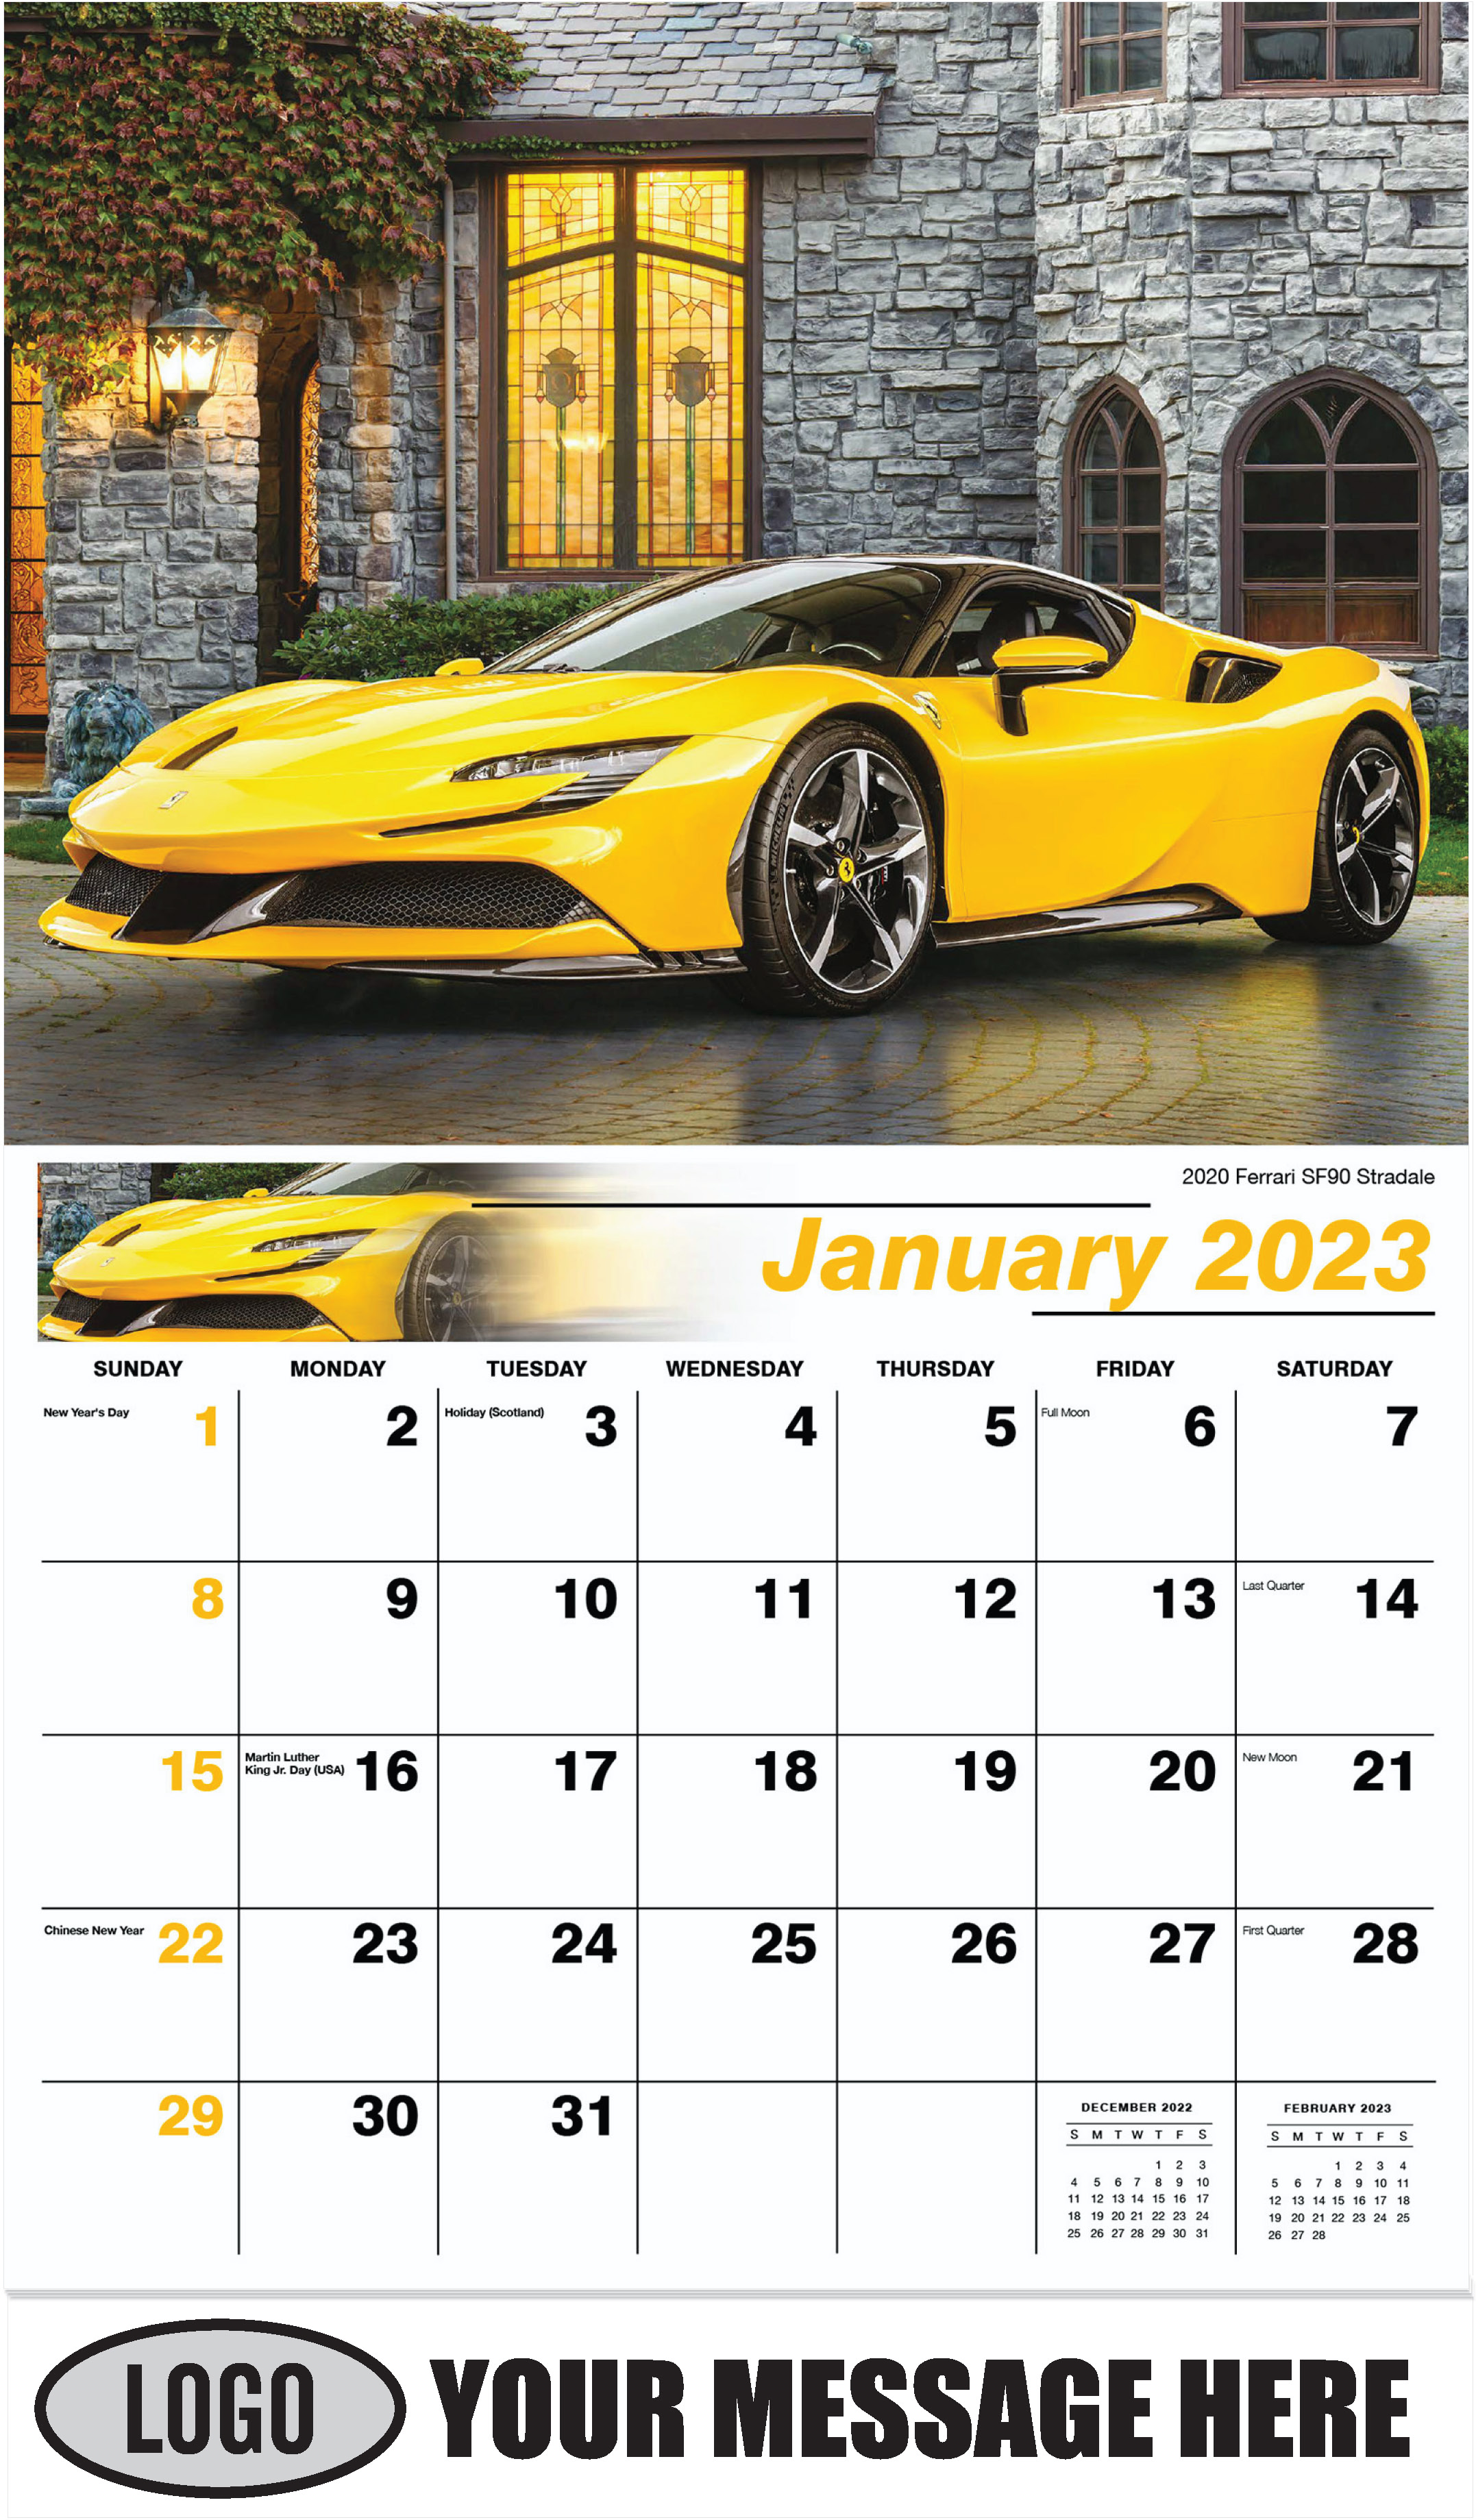 2020 Ferrari SF90 Stradale - January - Exotic Cars 2023 Promotional Calendar